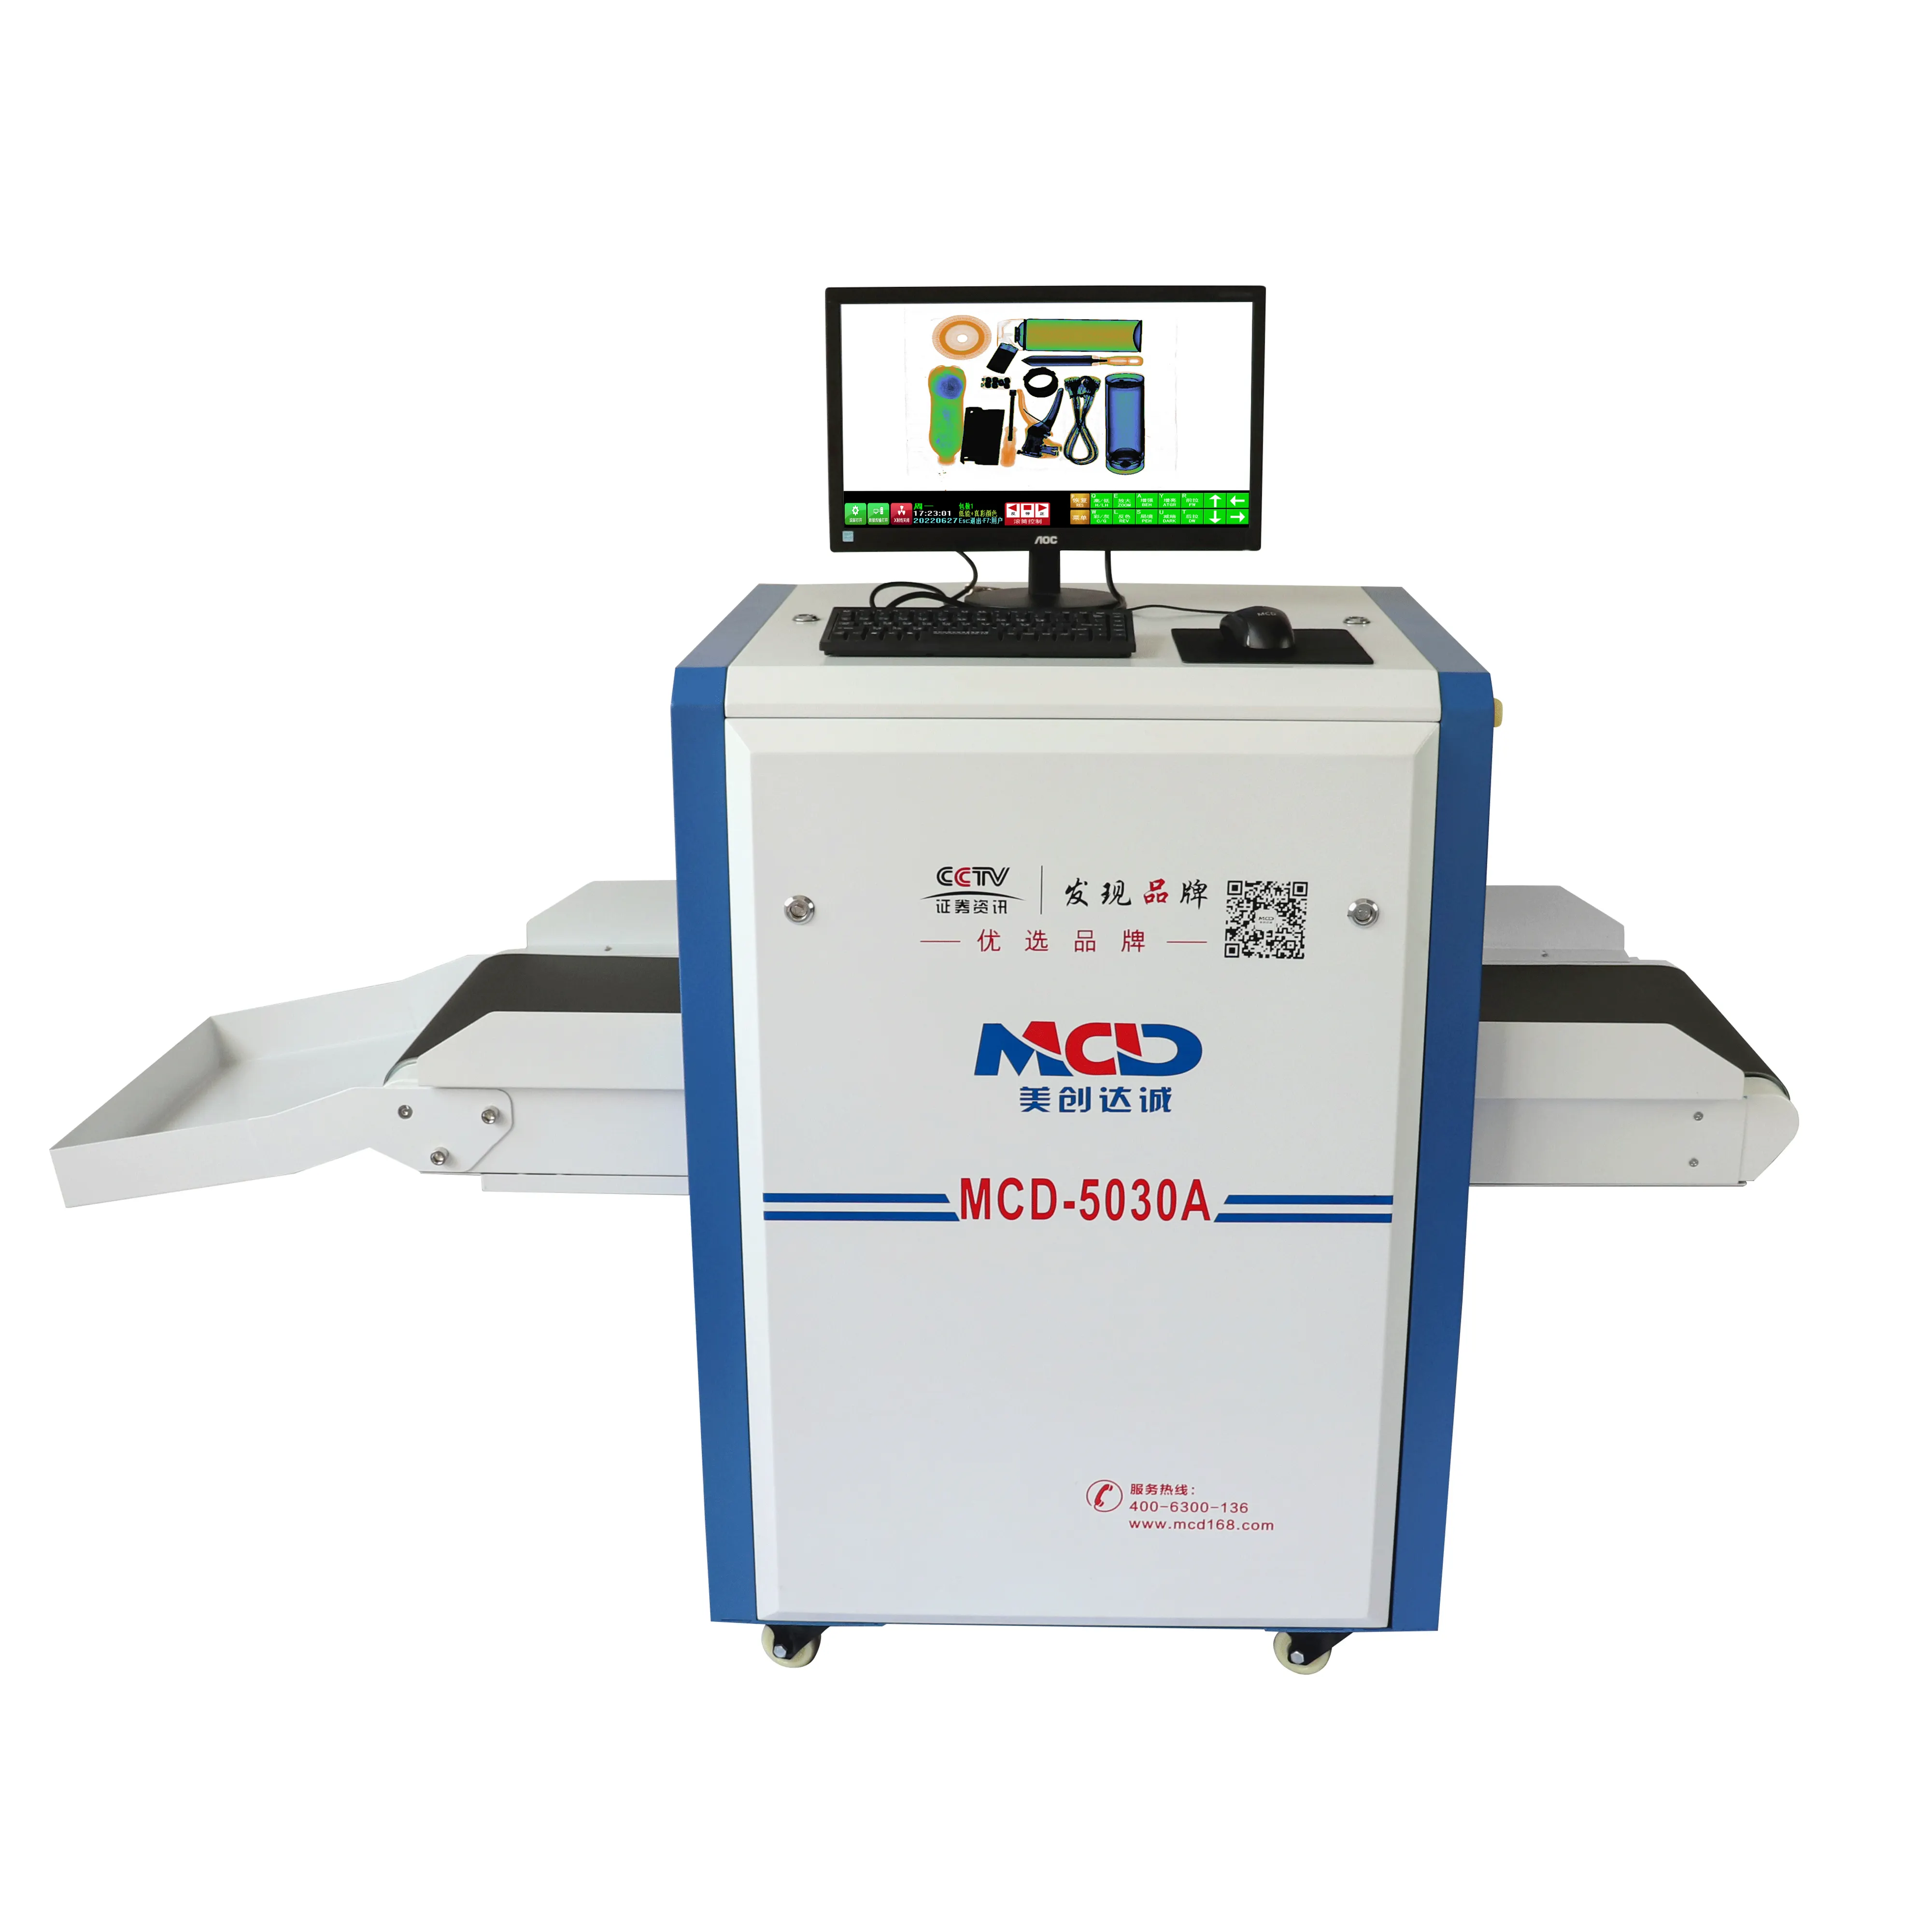 MCD-5030A X-Ray อุปกรณ์ตรวจคัดกรองความปลอดภัย X Ray เครื่องสแกนสัมภาระสำหรับสถานีรถไฟใต้ดินสนามบินโรงพยาบาลสถานีห้างสรรพสินค้า